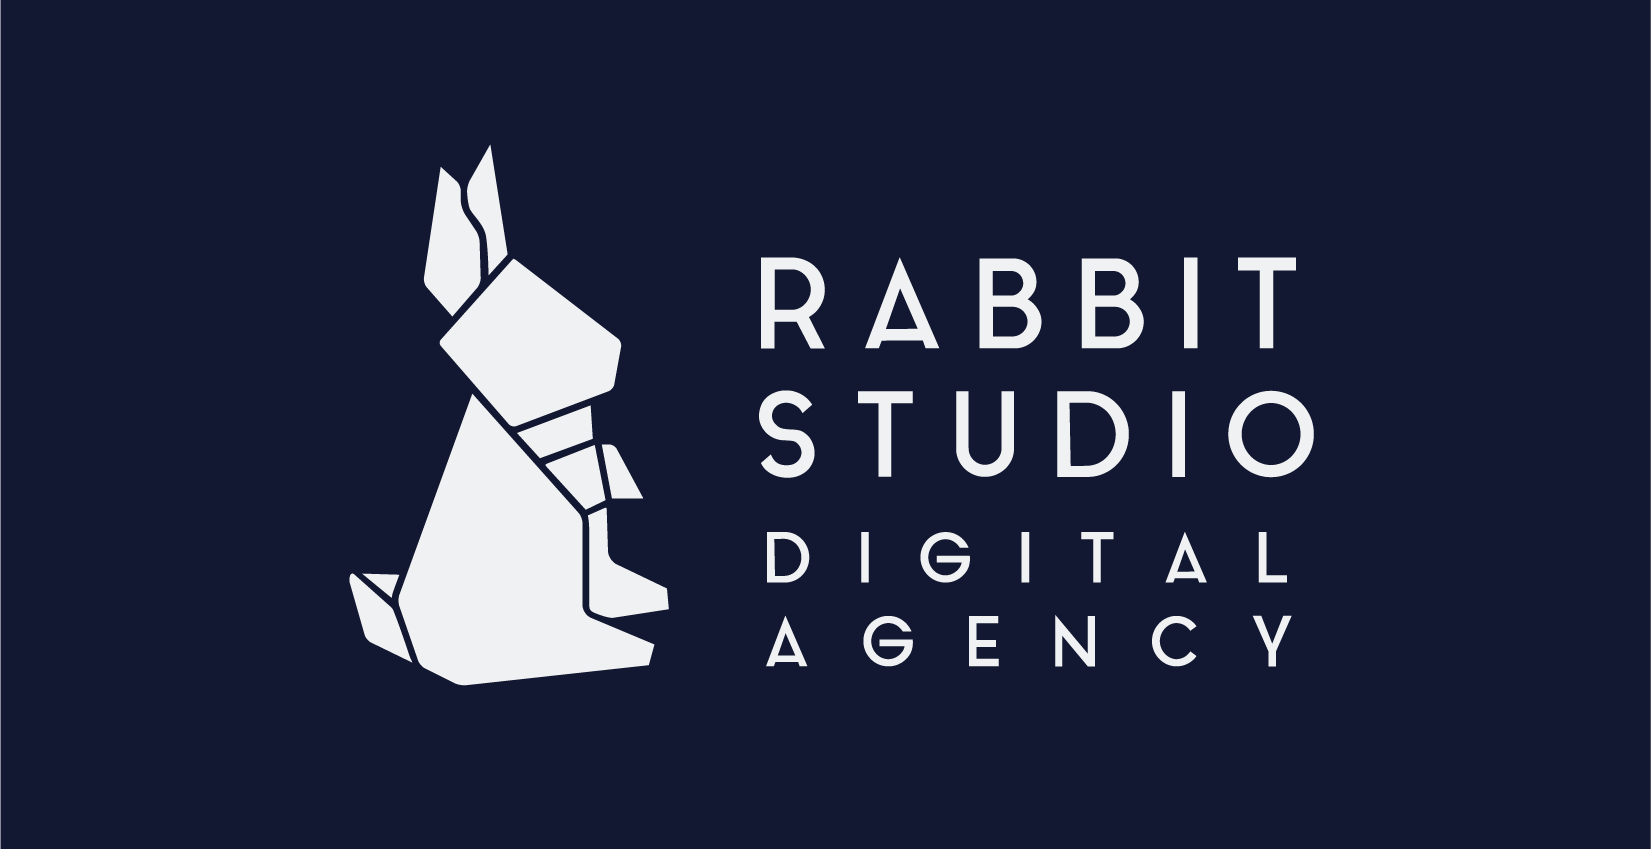 Rabbit Studio Digital Agency